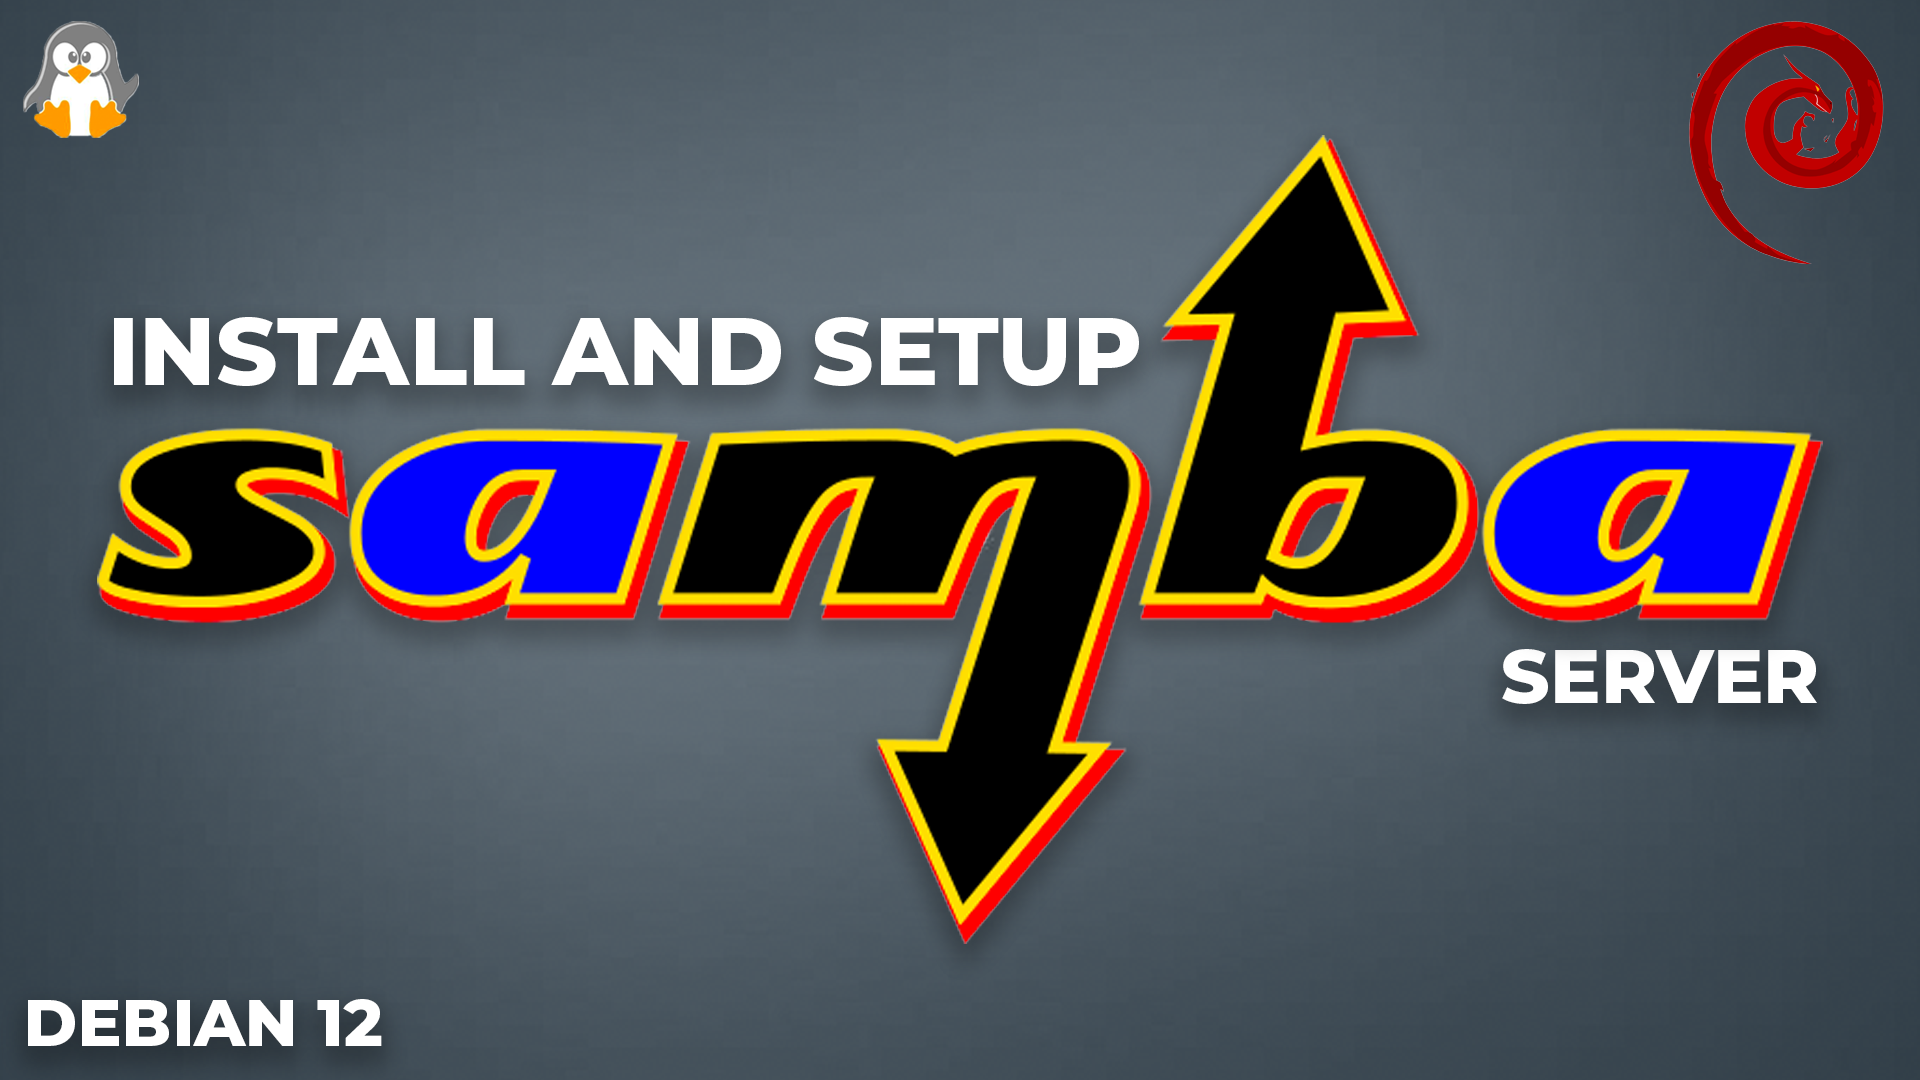 How to Install and Setup Samba Server on Debian 12?